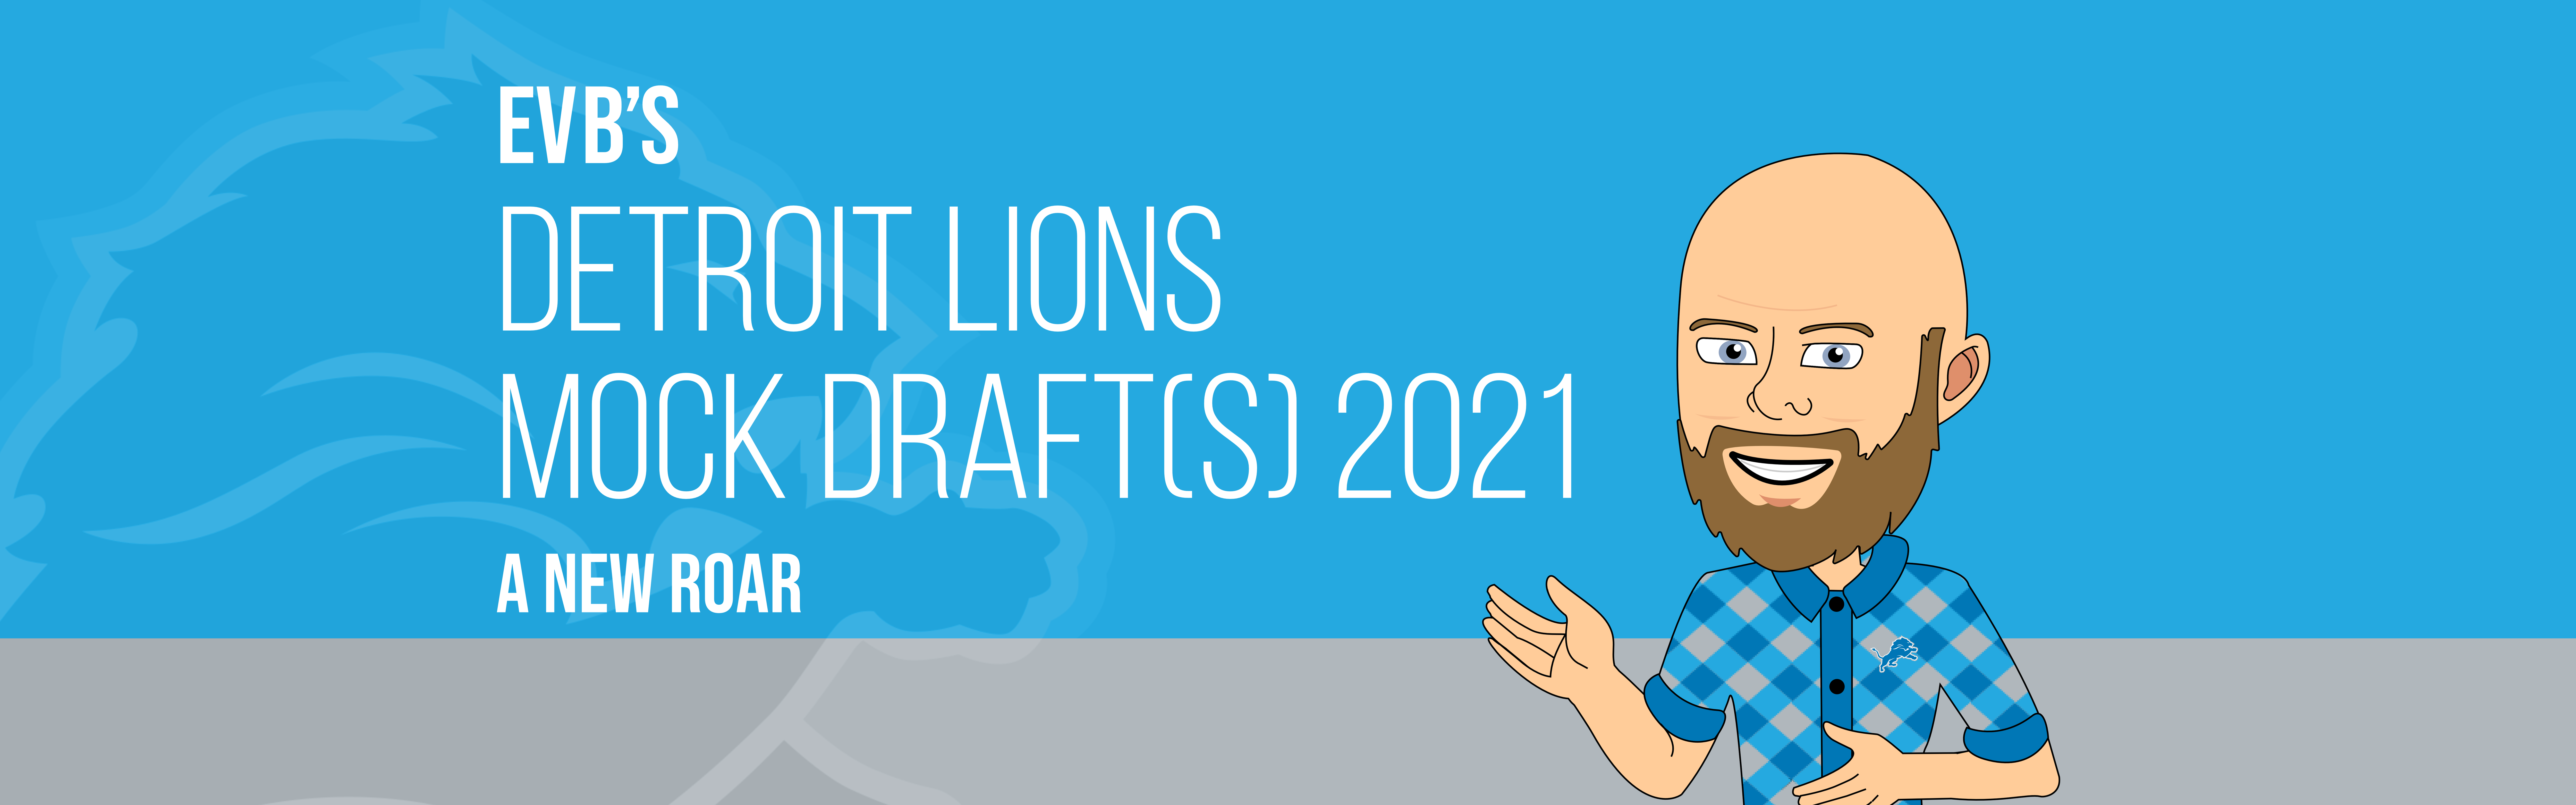 EVB's Detroit Lions Mock Draft 2021